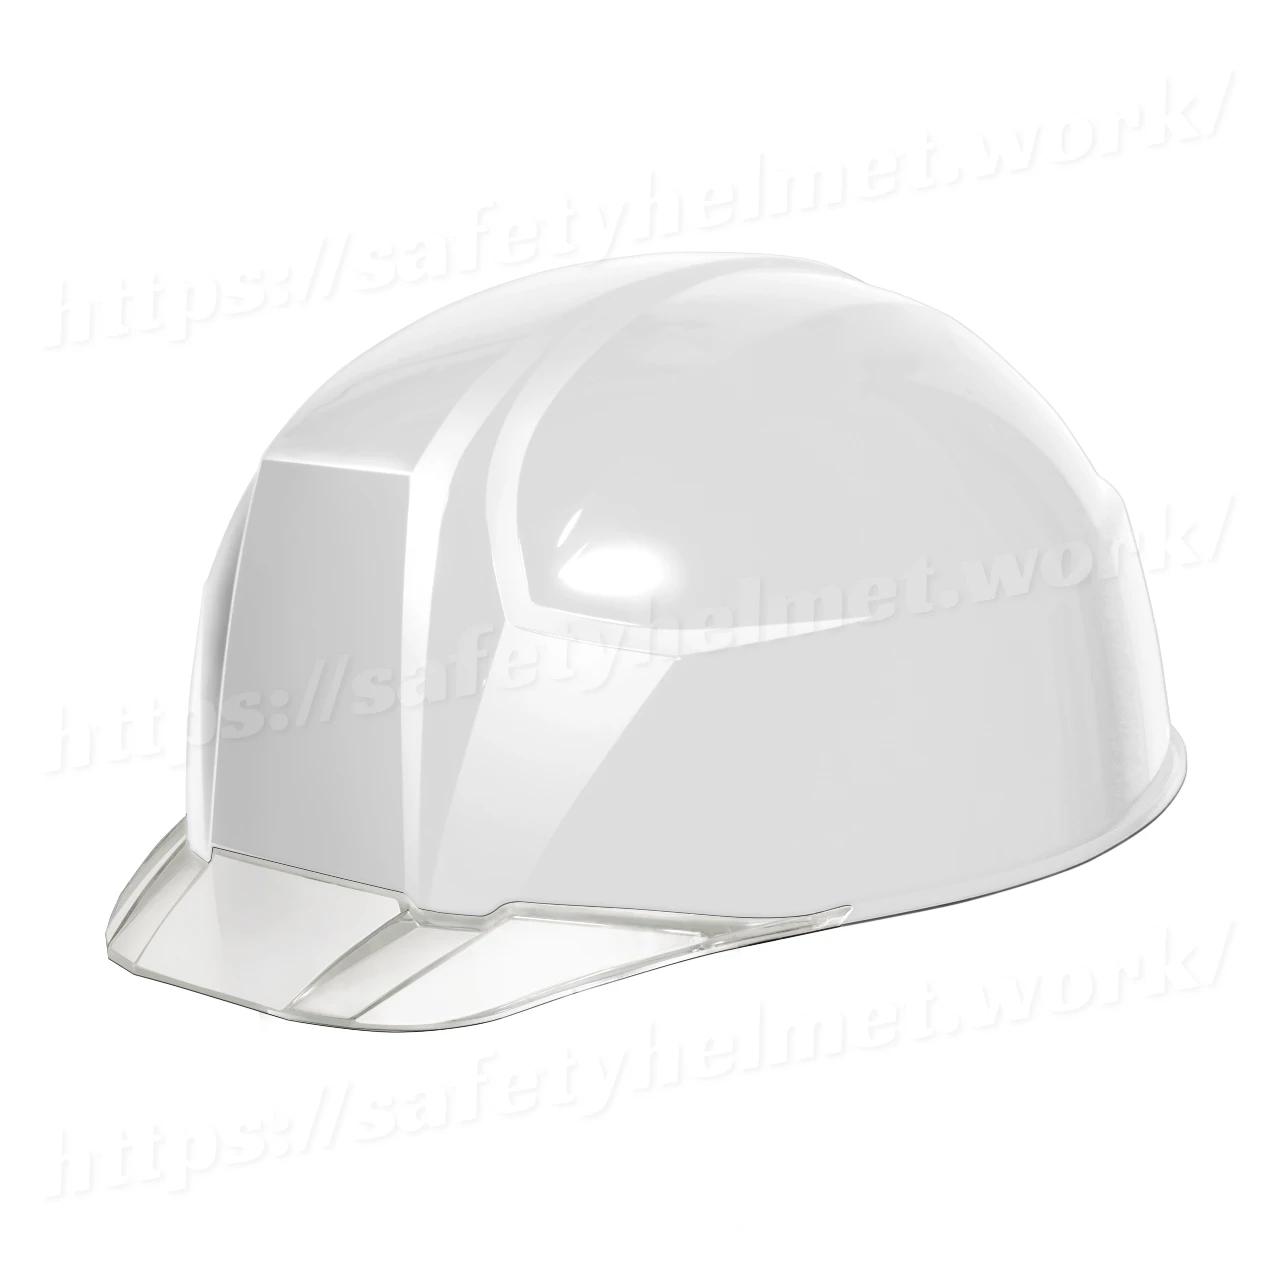 dic-lightest-helmet-keijin-clearvisor-aa23c-white-clear